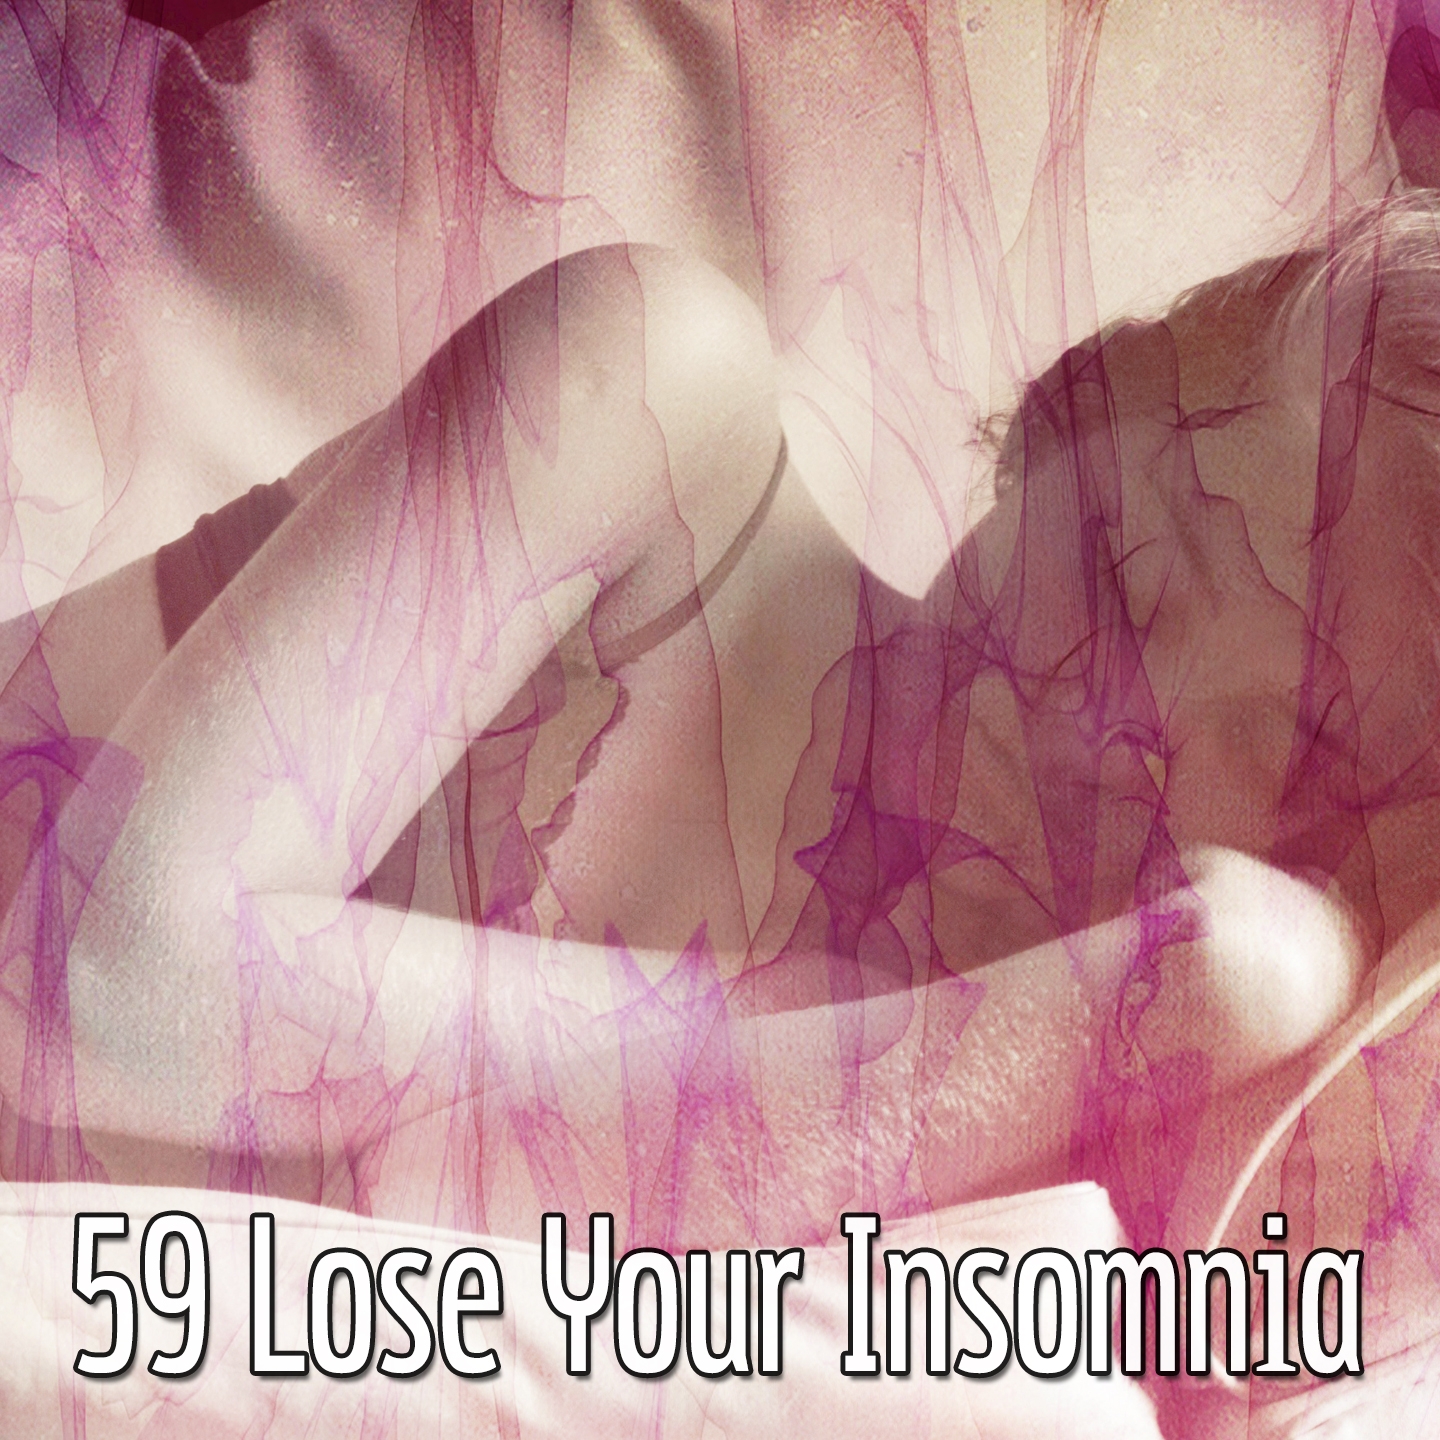 59 Lose Your Insomnia